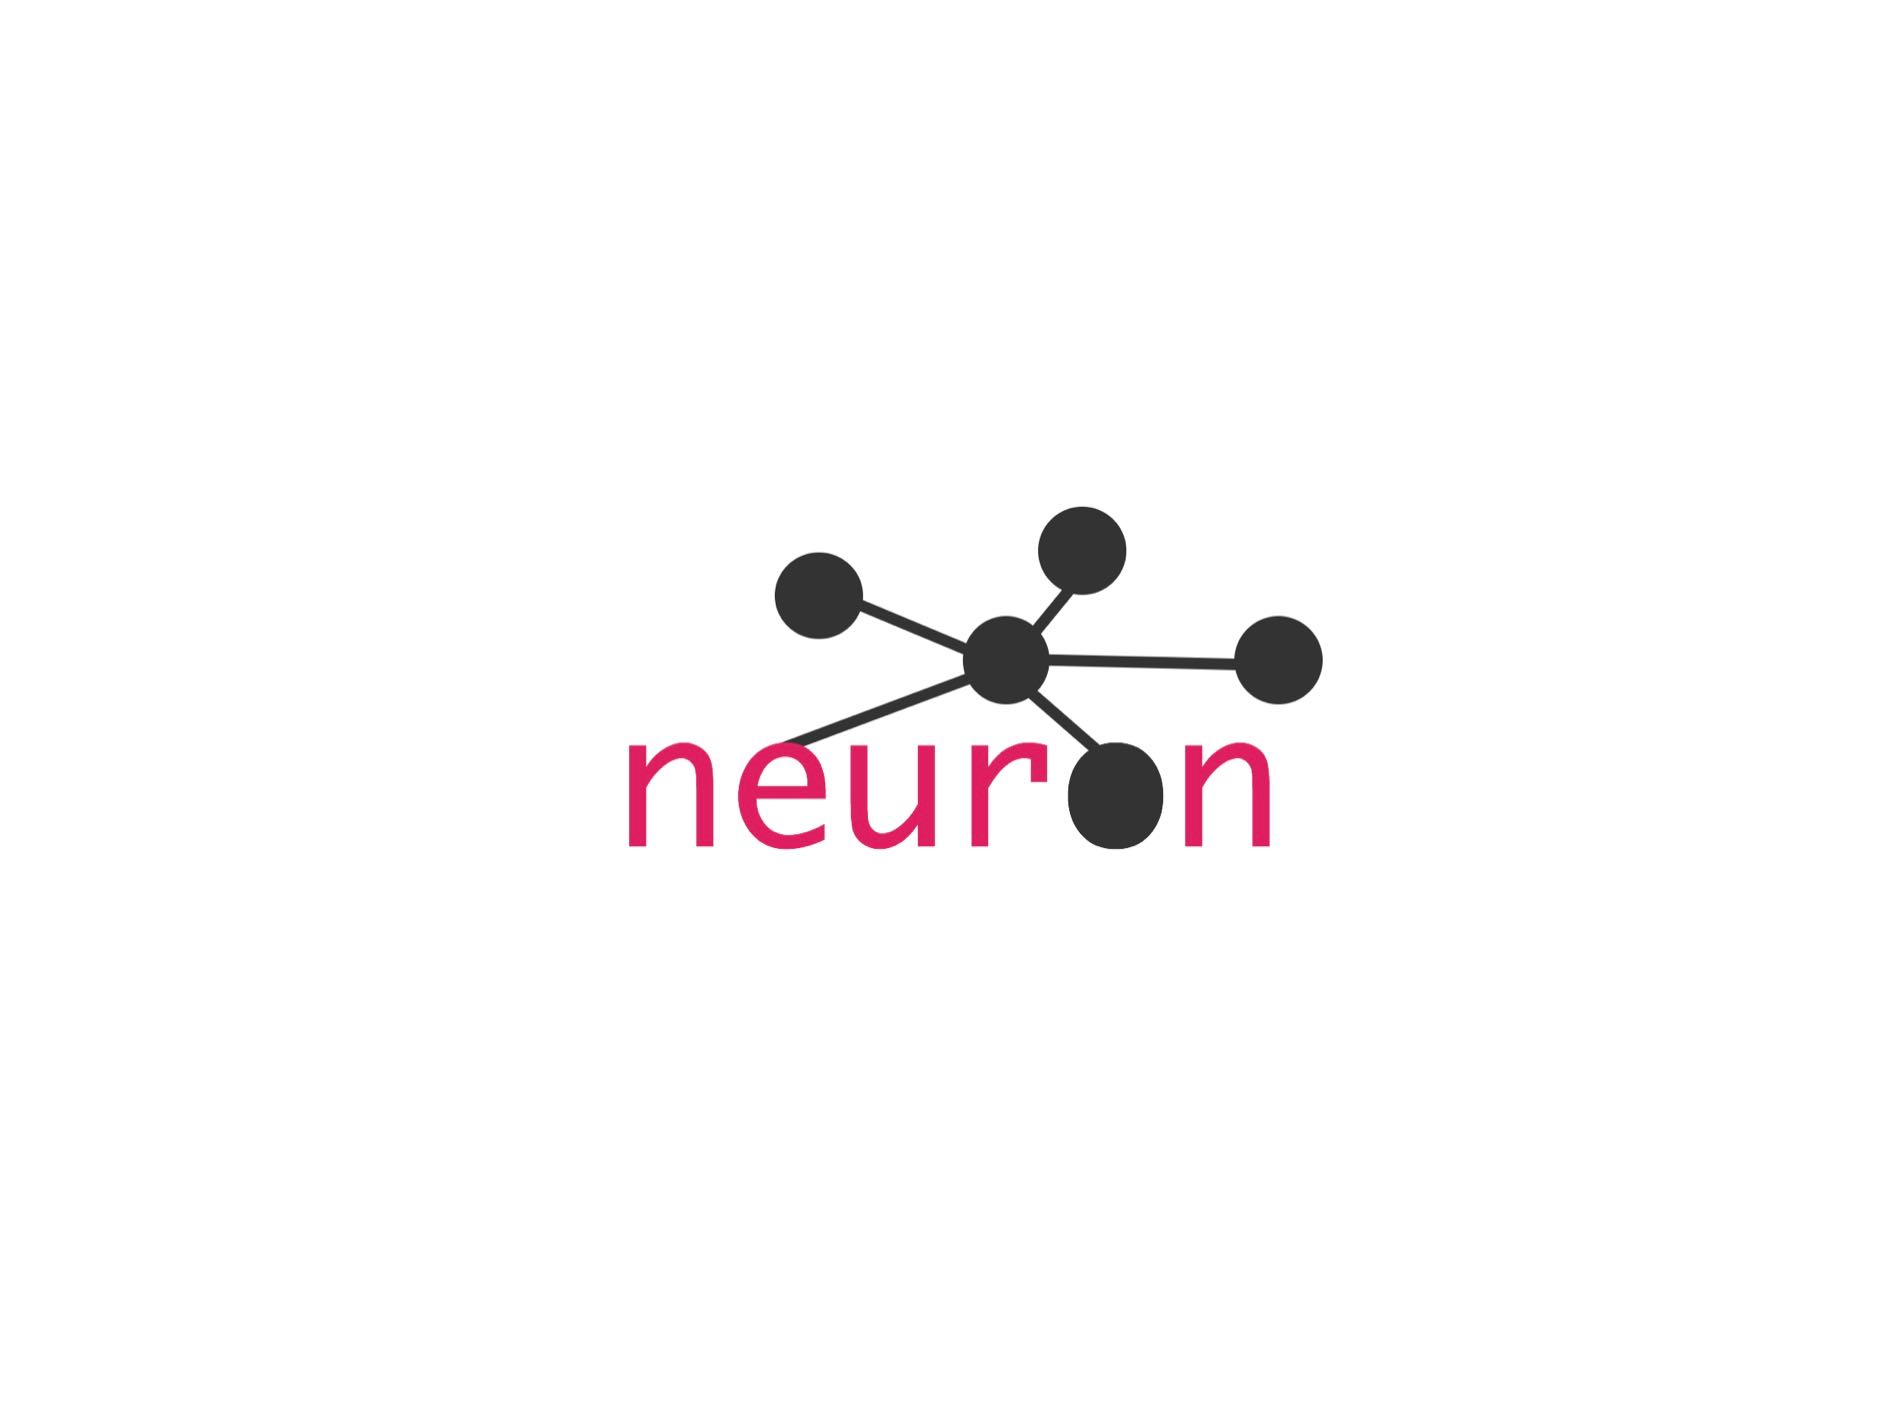 Project neuron